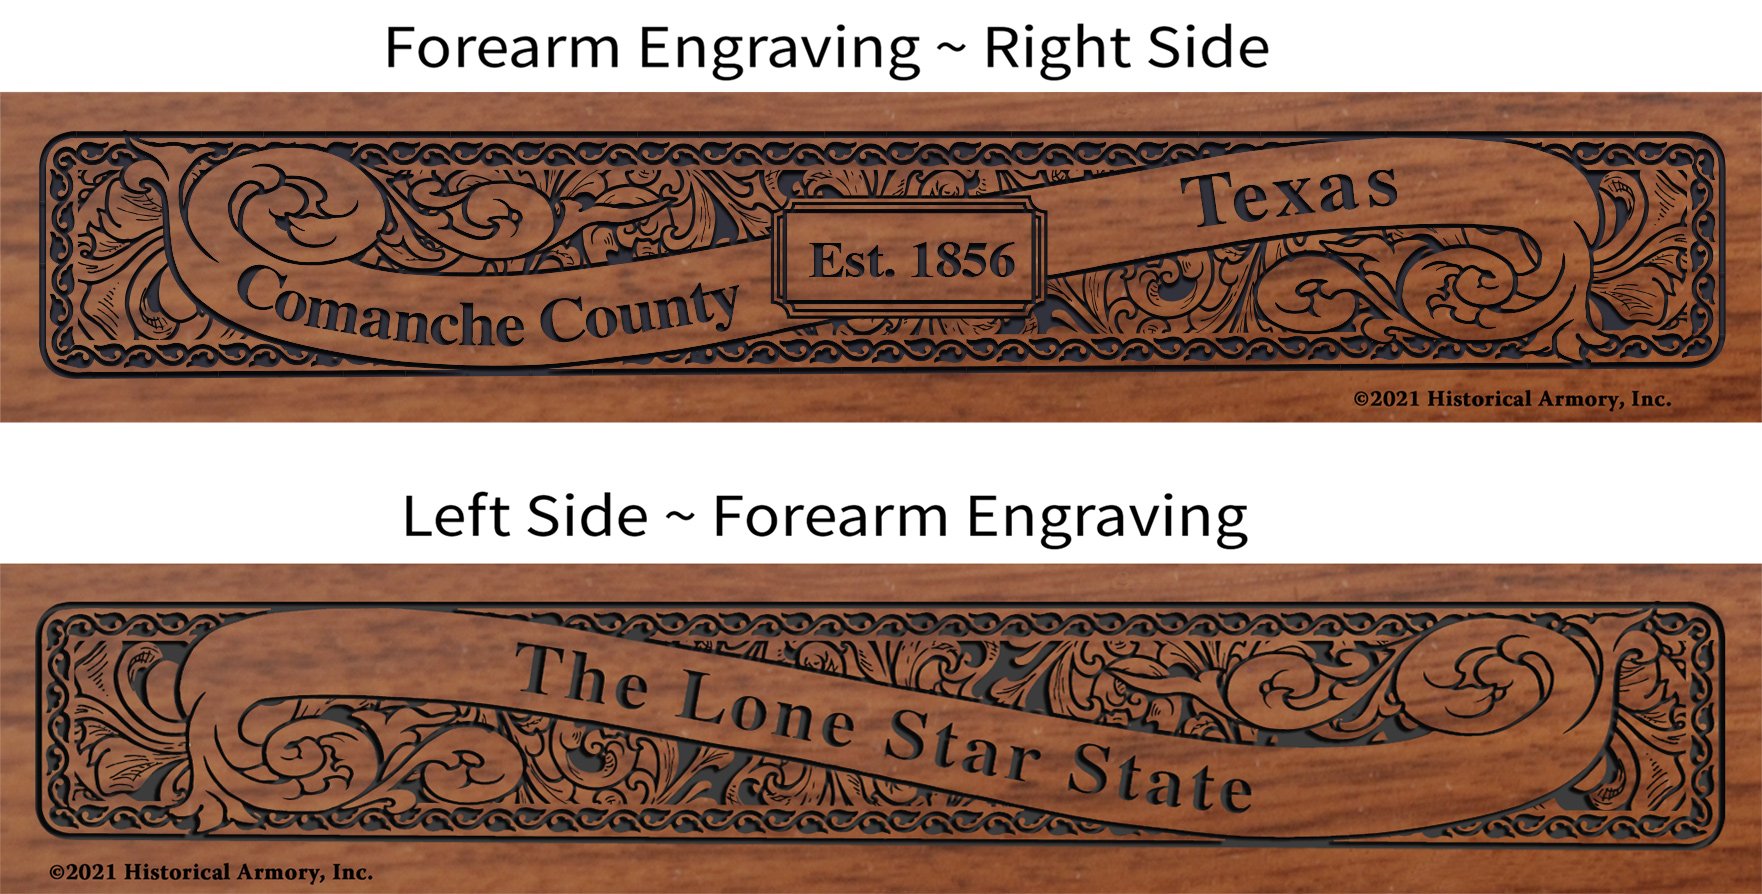 Comanche County Texas Establishment and Motto History Engraved Rifle Forearm